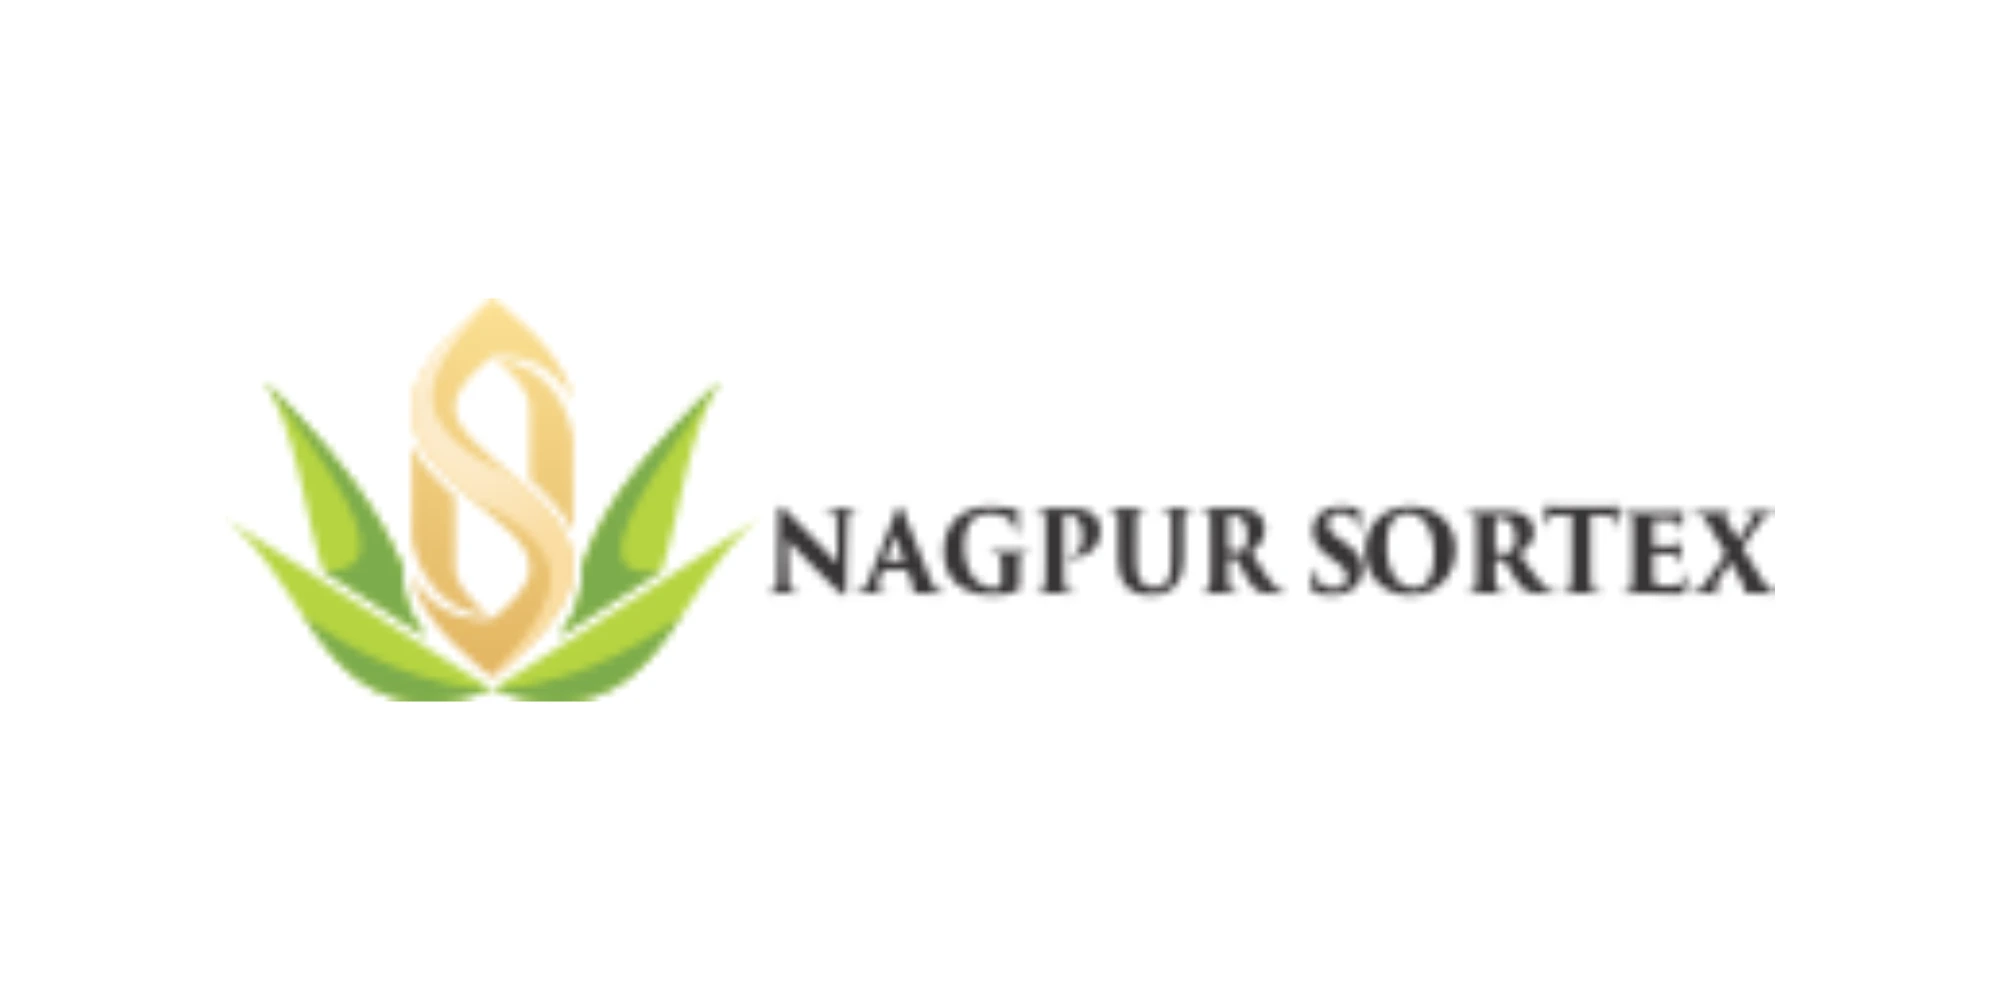 Nagpur sortex